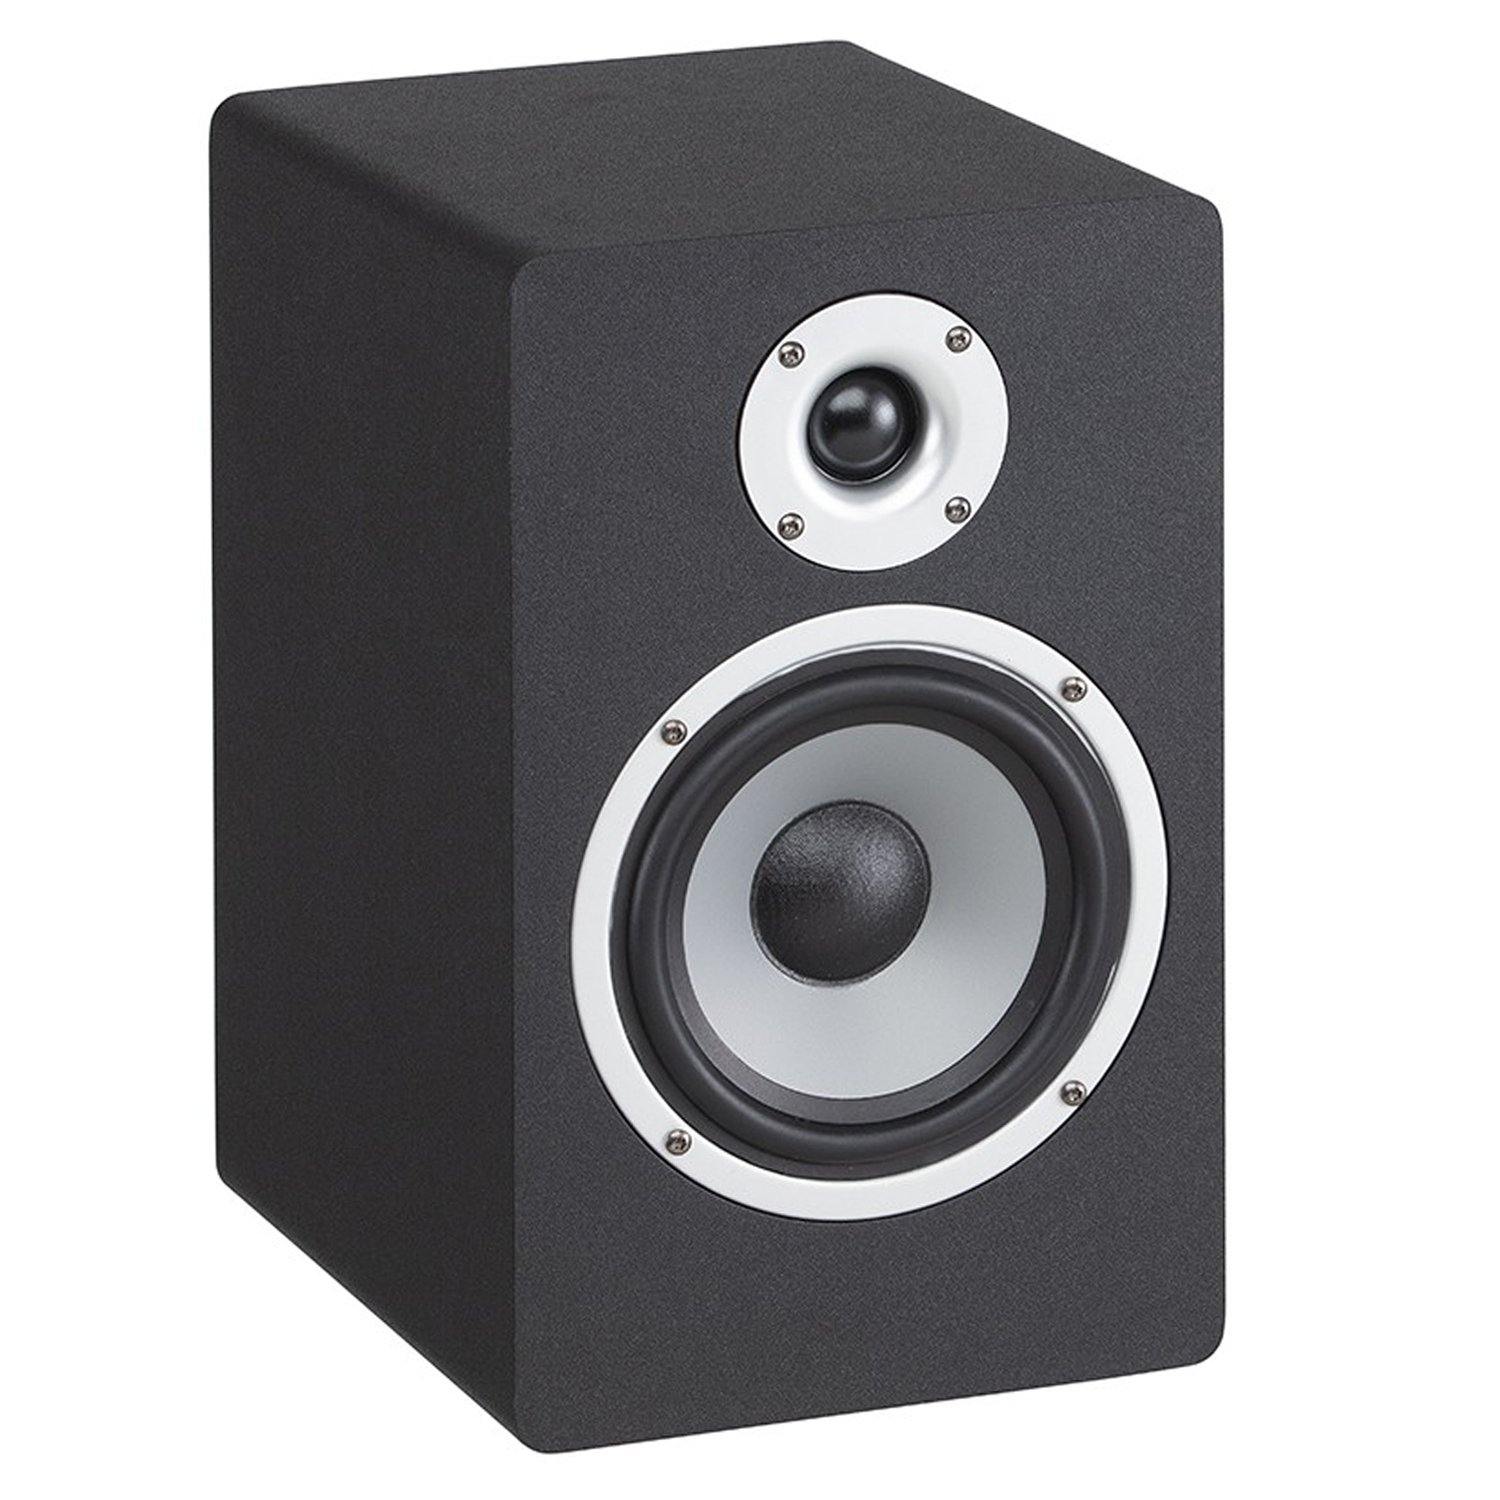 2 x Soundsation Clarirty A5 5.25" Studio Monitor Black - DY Pro Audio